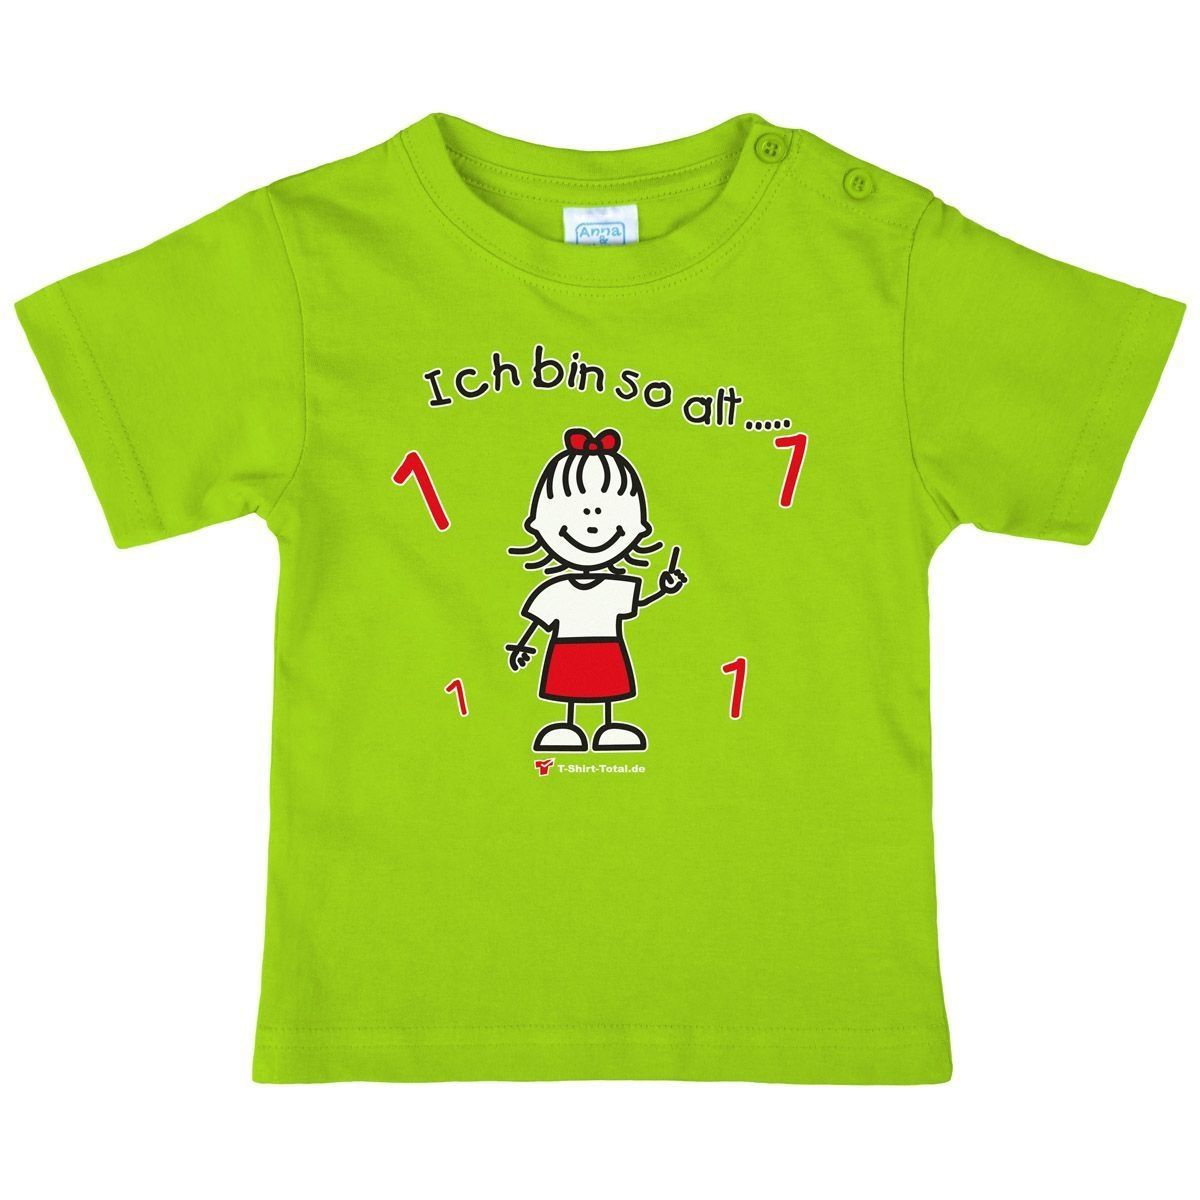 Mädchen so alt 1 Kinder T-Shirt hellgrün 68 / 74